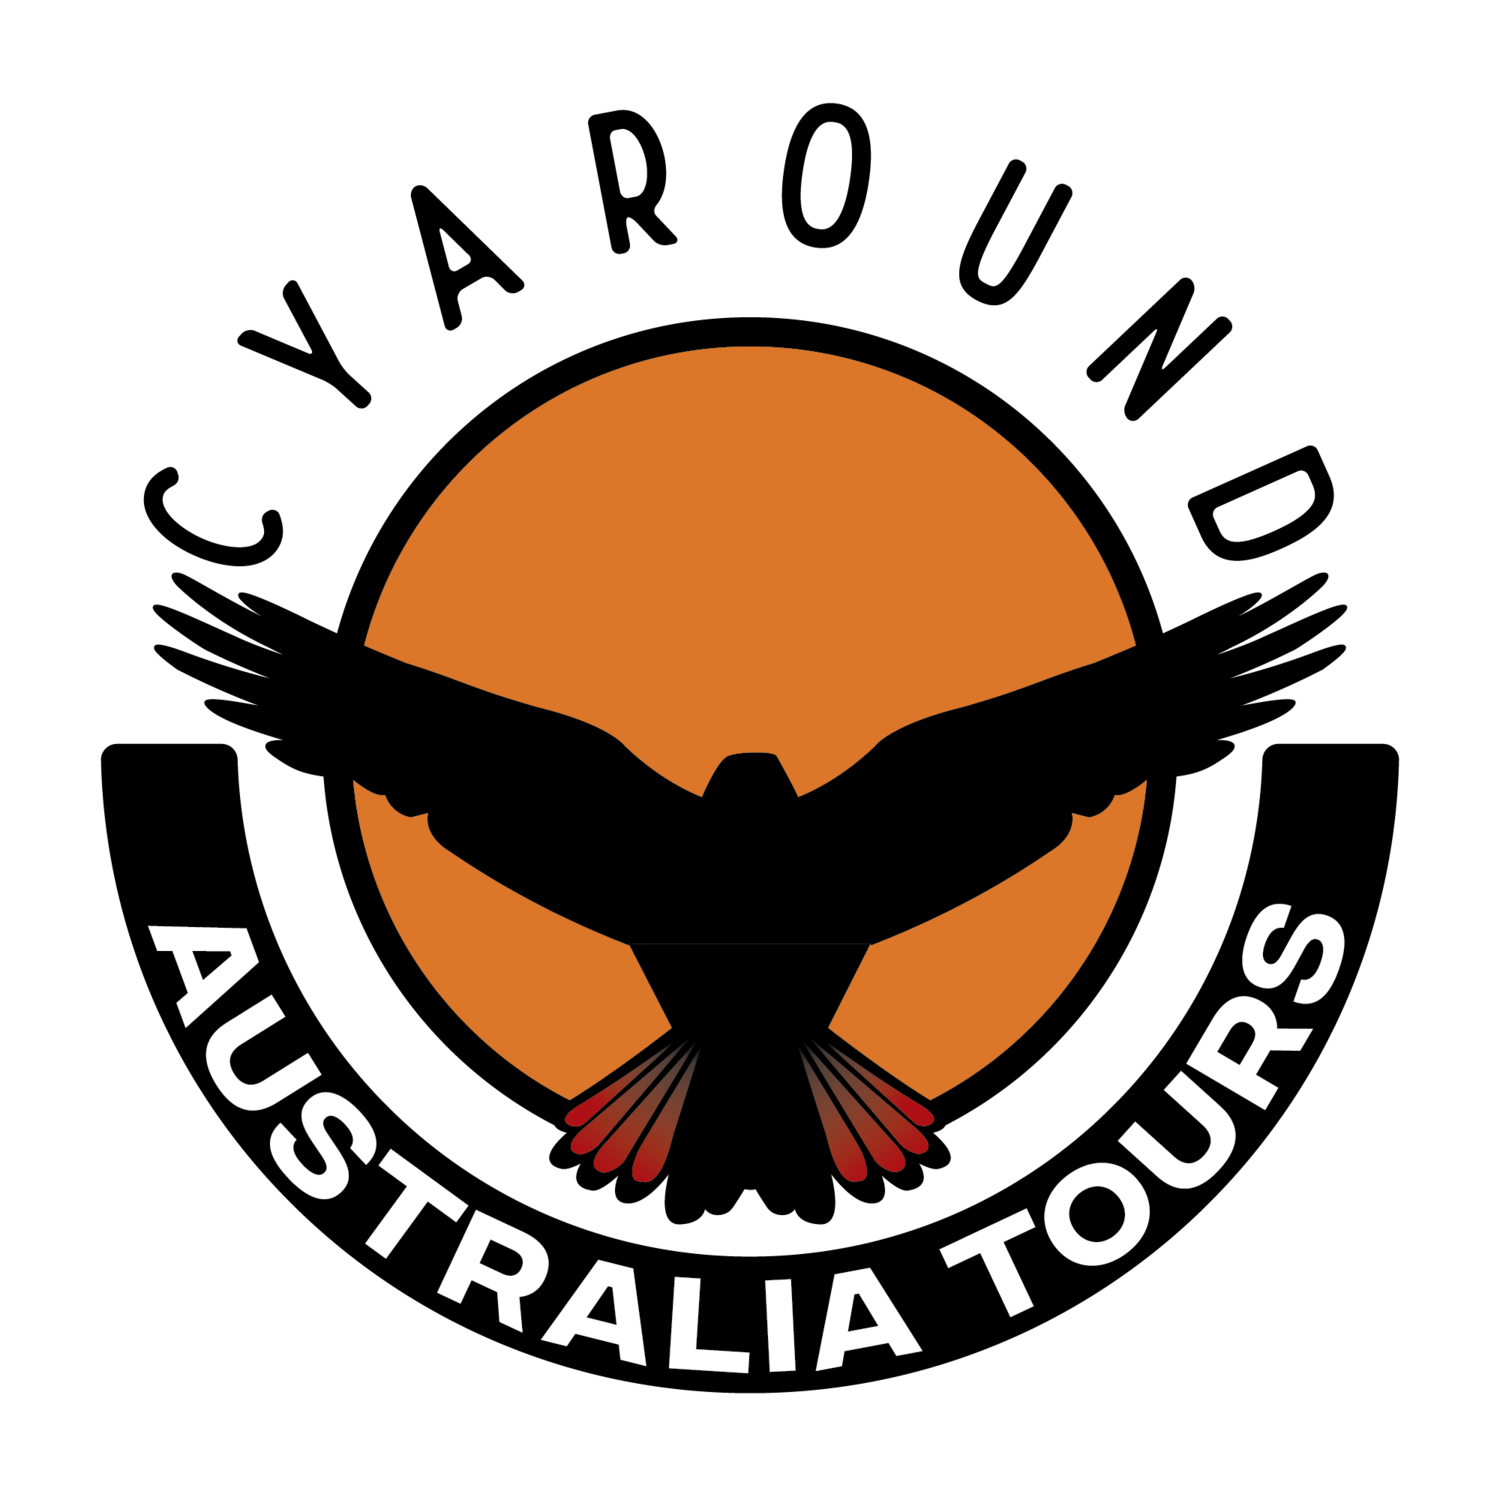 Cyaround Australia Tours